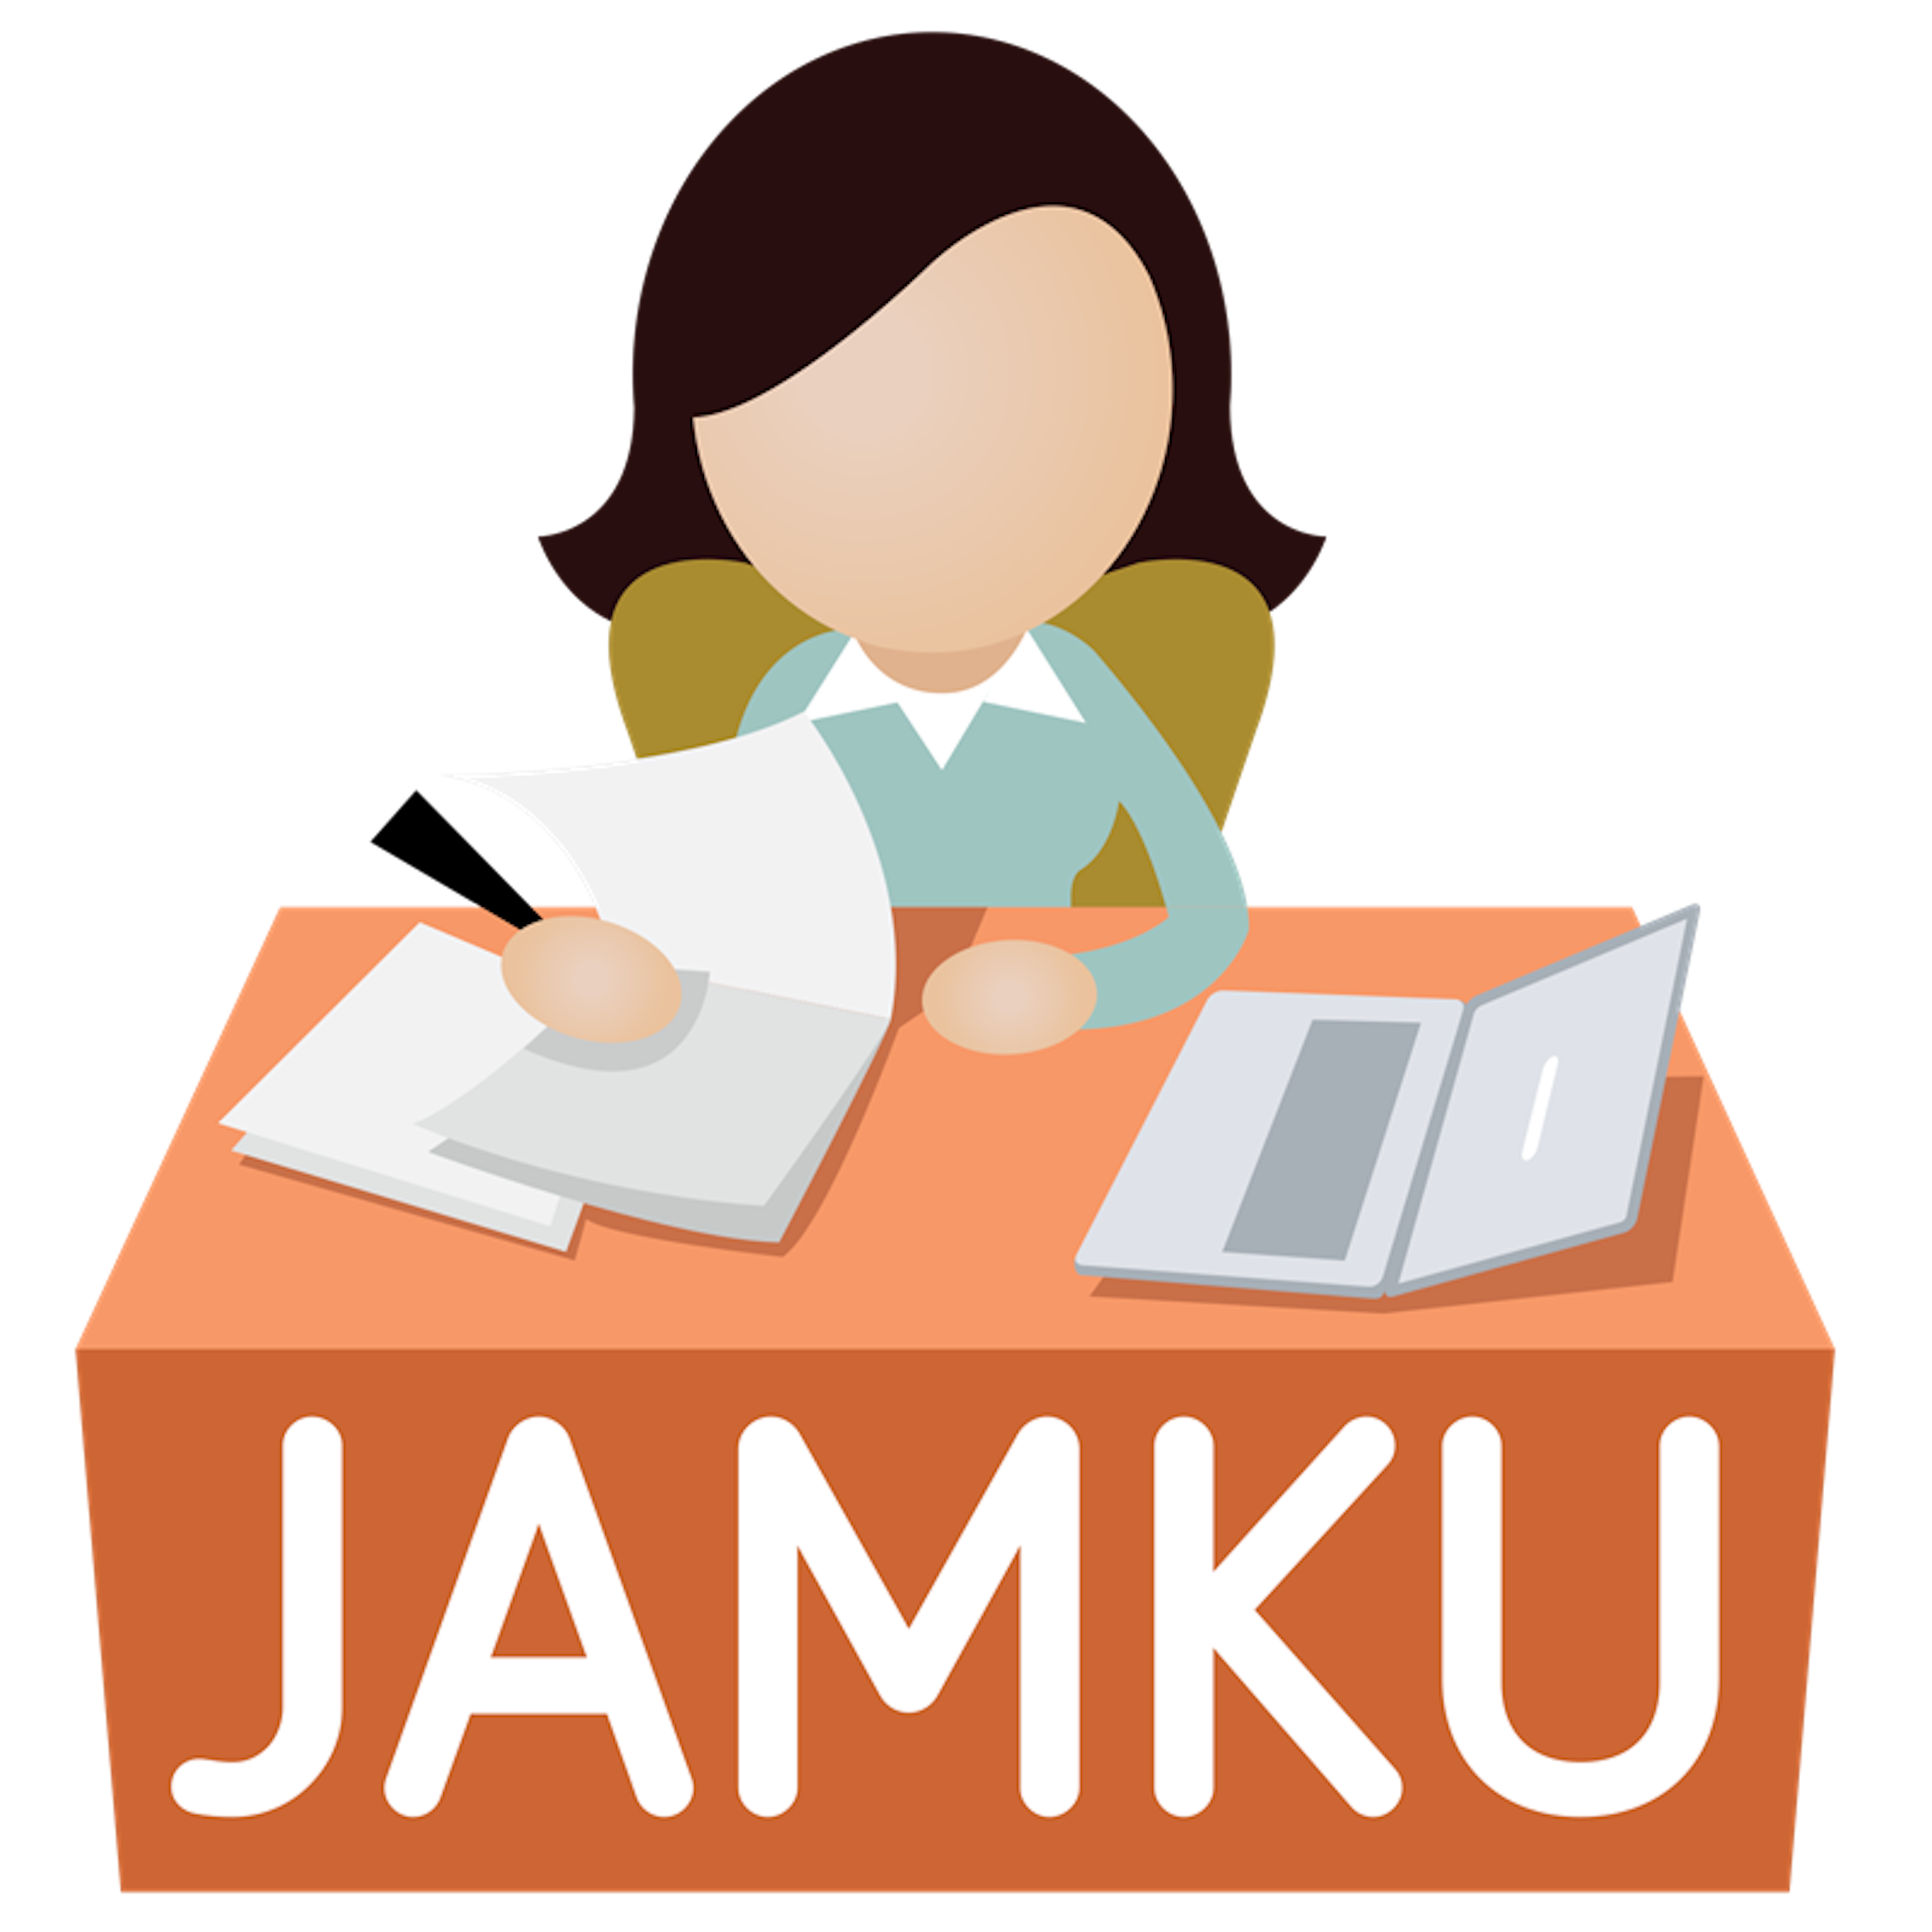 Jamku Logo